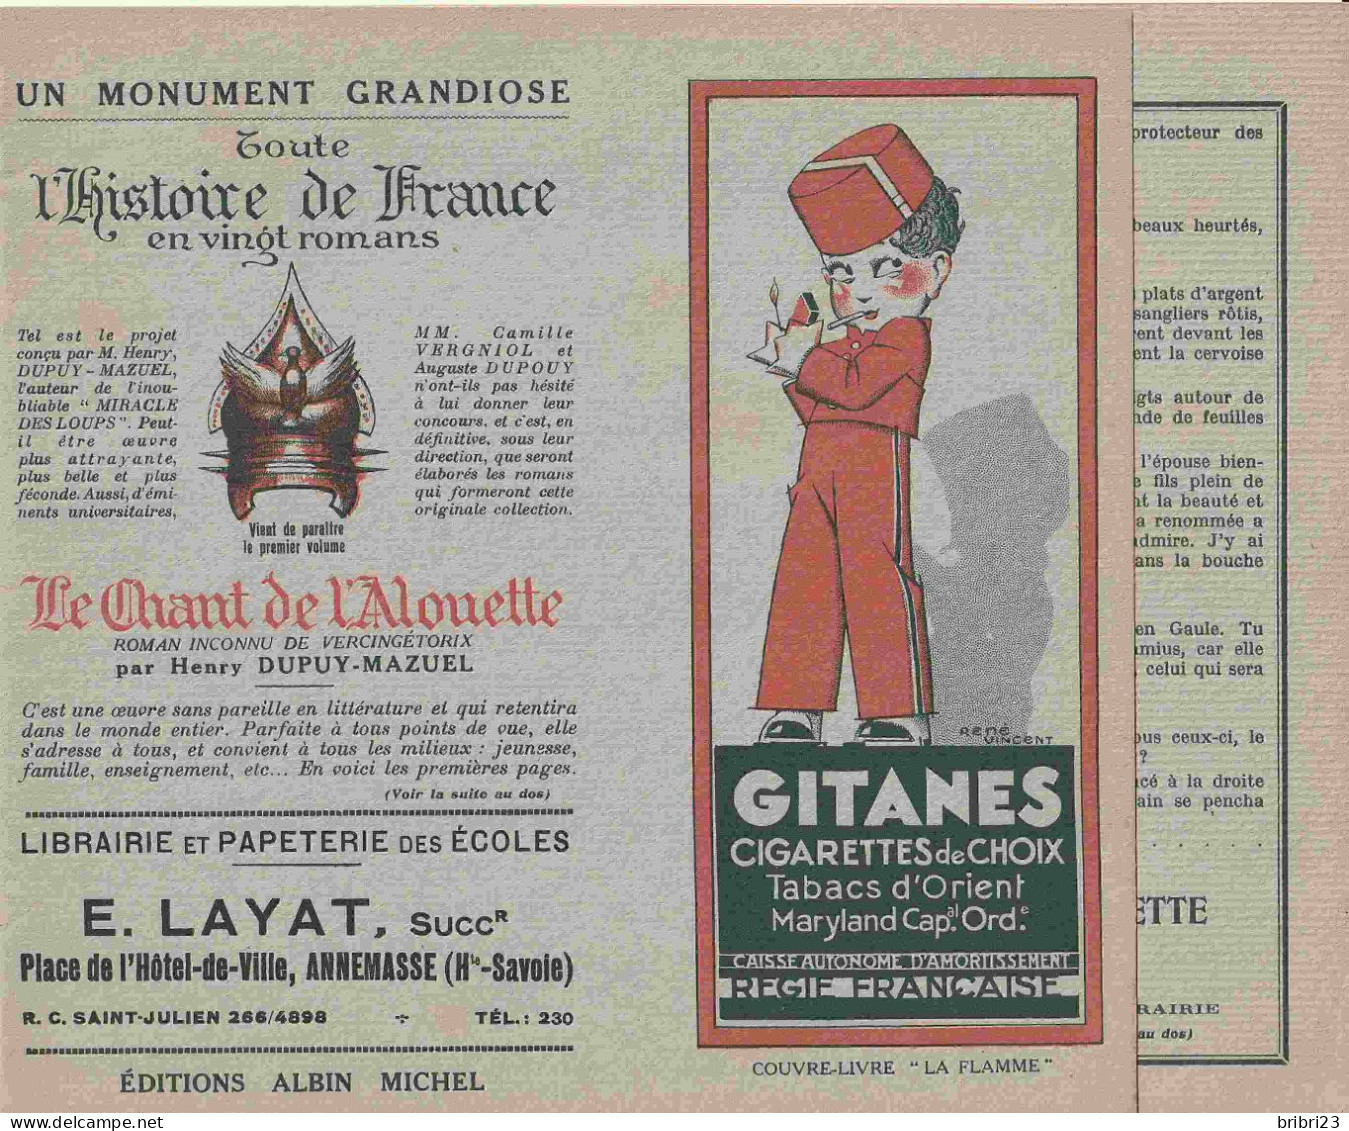 COUVRE-LIVRE " LA FLAMME " PUBLICITE LIBRAIRIE Annemasse - CIGARETTES GITANES BALTO - Tobacco